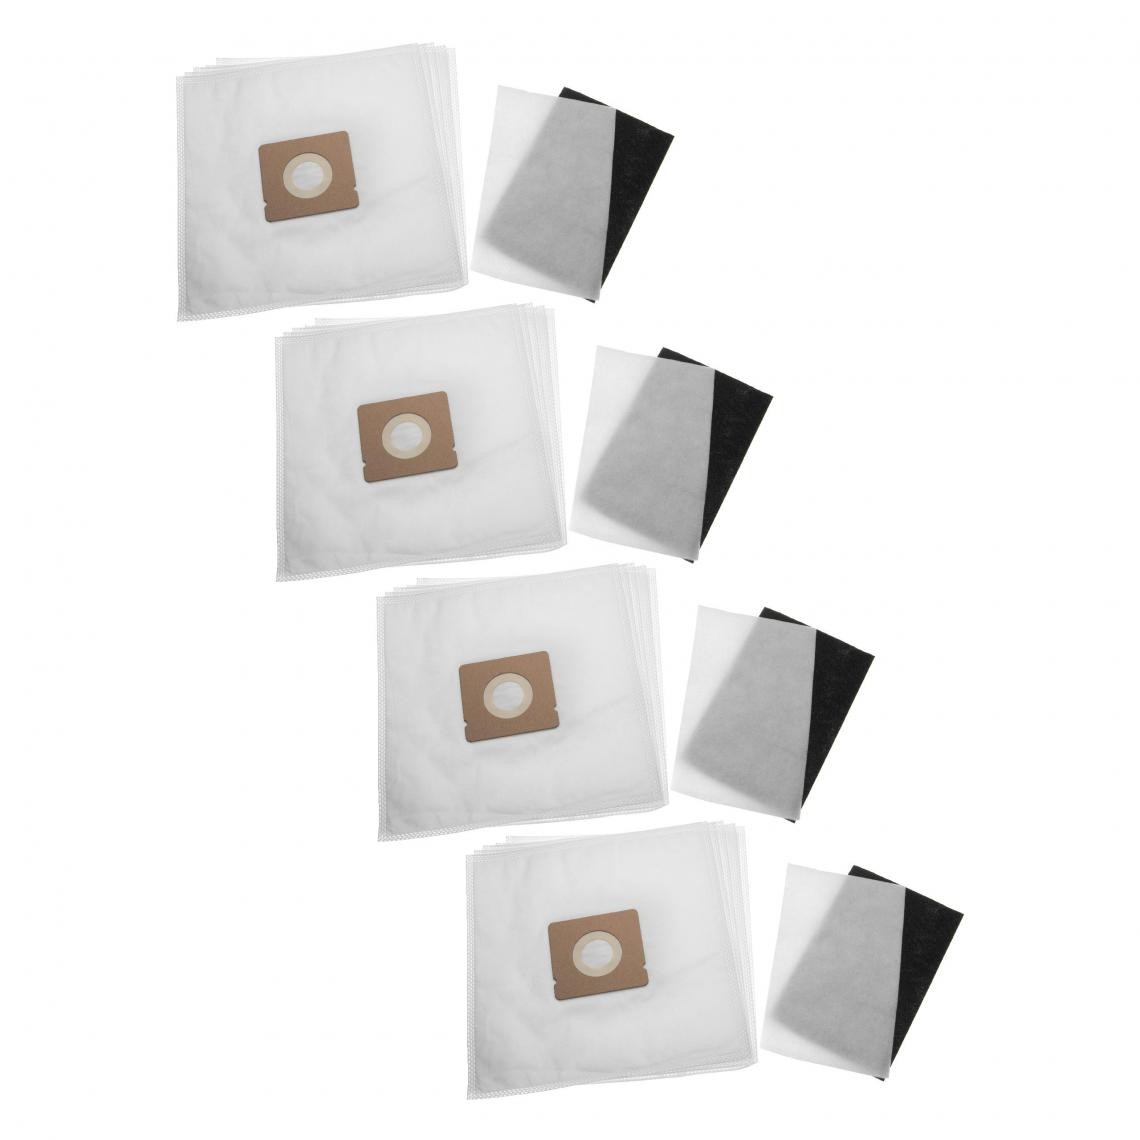 Vhbw - vhbw Lot de sacs (microfibres non tissées) + filtre avec 24 pièces compatible avec Moulinex MO154501/4Q0, MO155501/4Q0, MO182301/4Q0 aspirateur - Accessoire entretien des sols